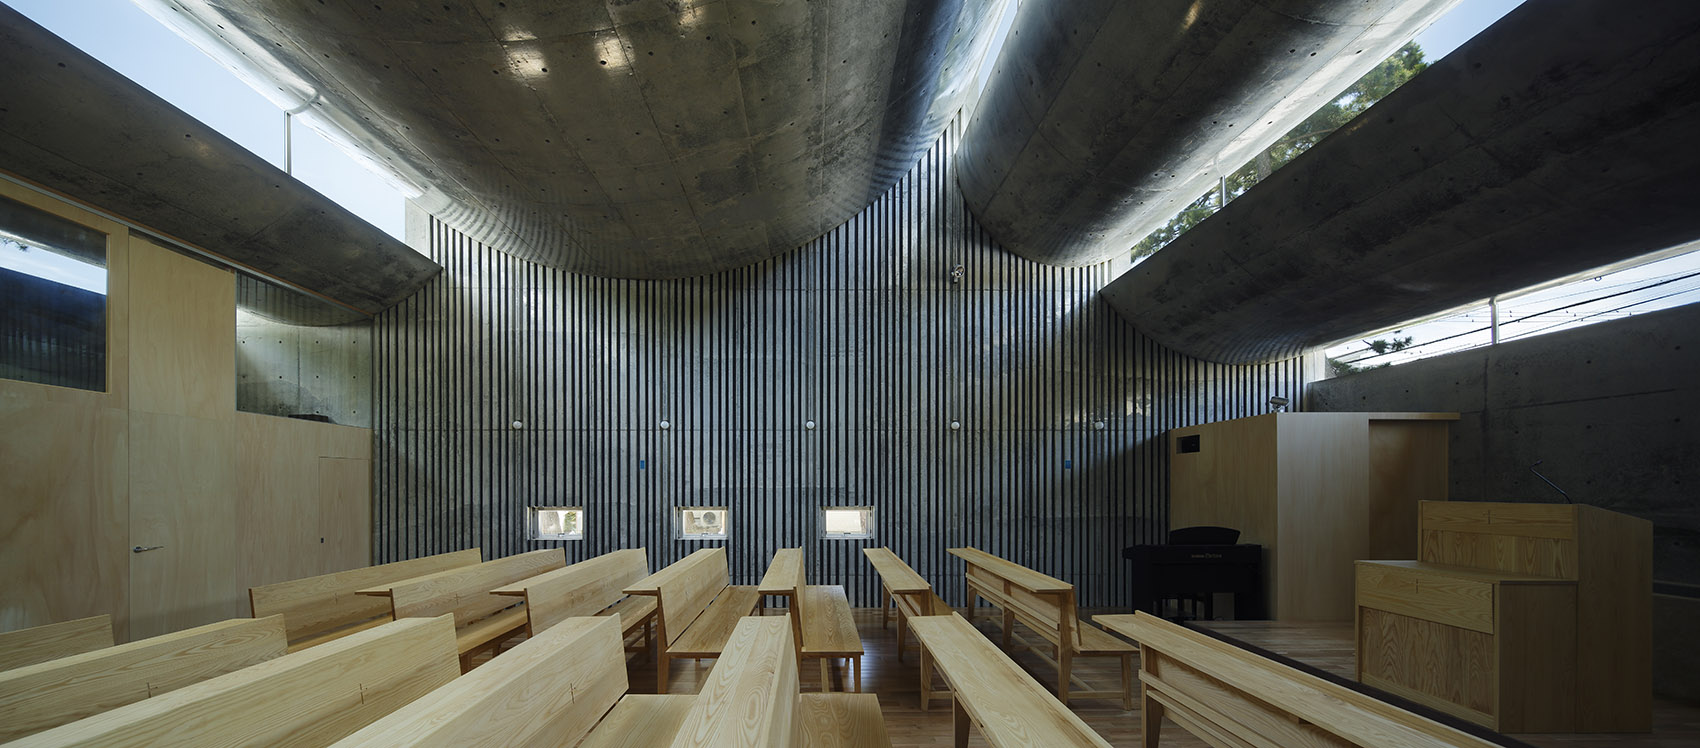 039-shonan-christ-church-by-takeshi-hosaka-architects.jpg